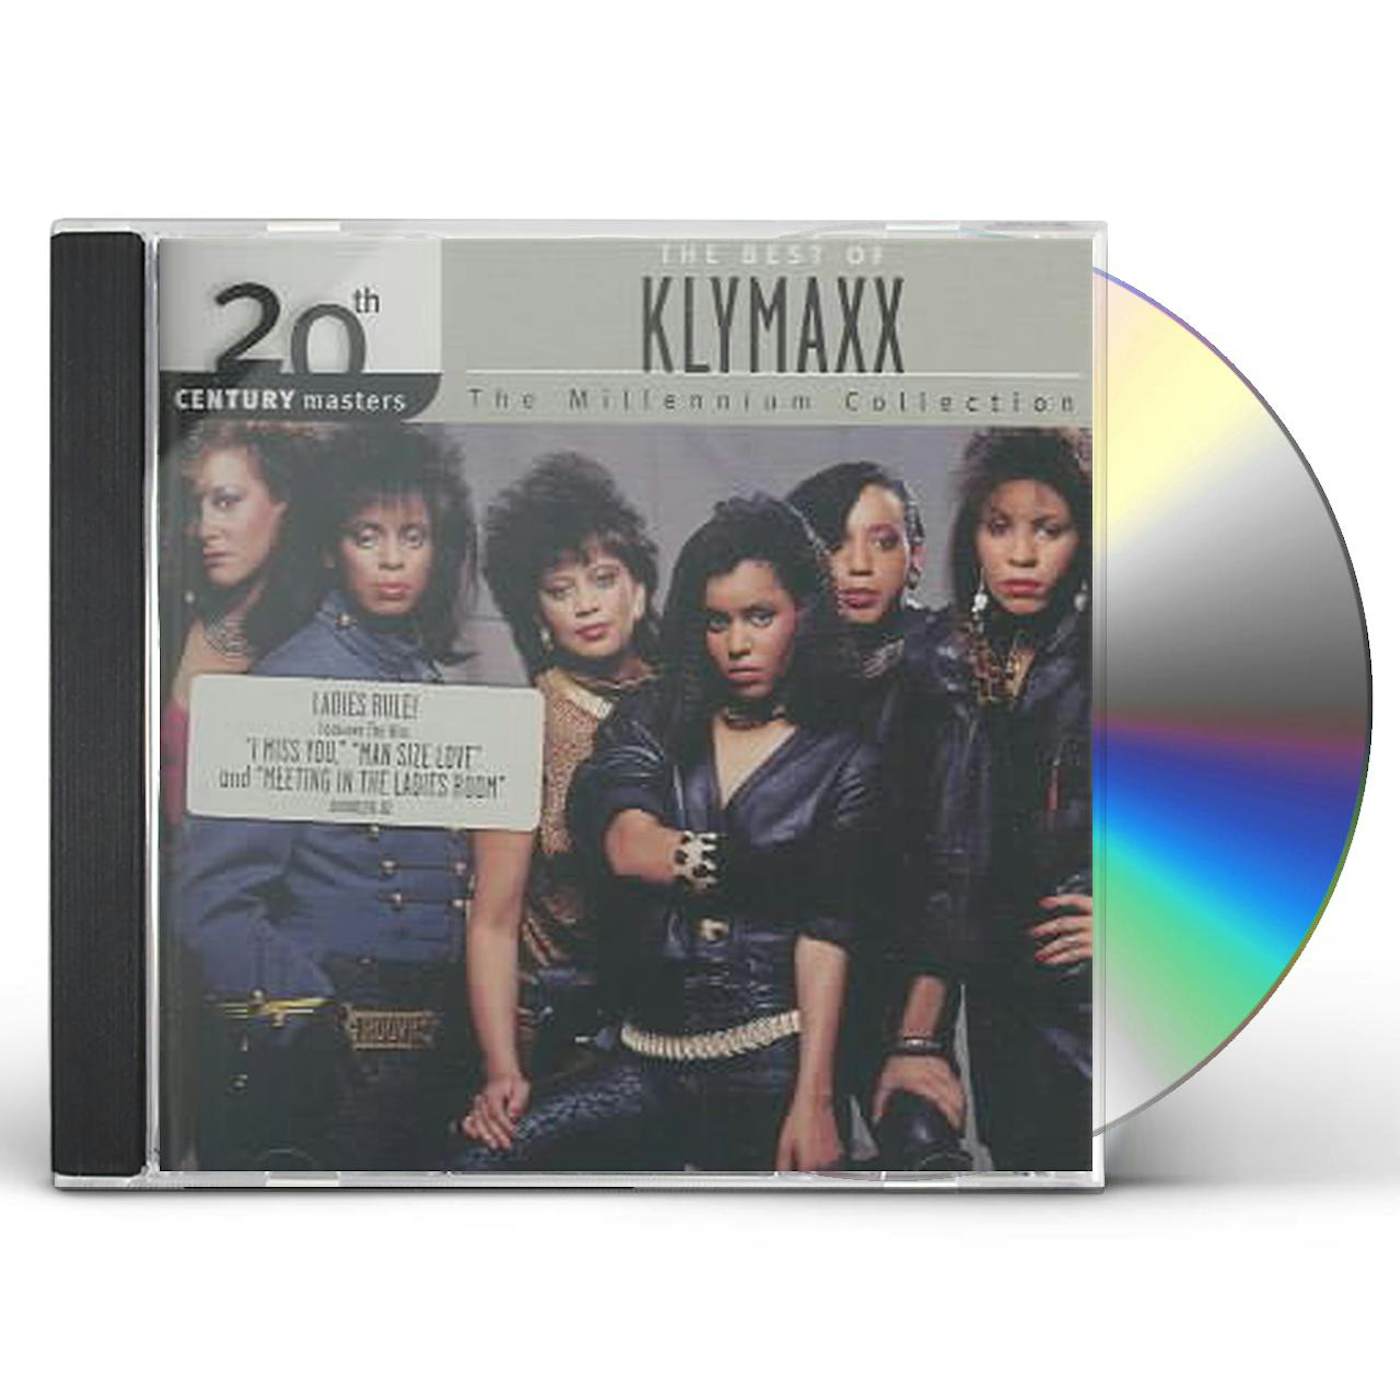 Klymaxx 20TH CENTURY MASTERS: MILLENNIUM COLLECTION CD